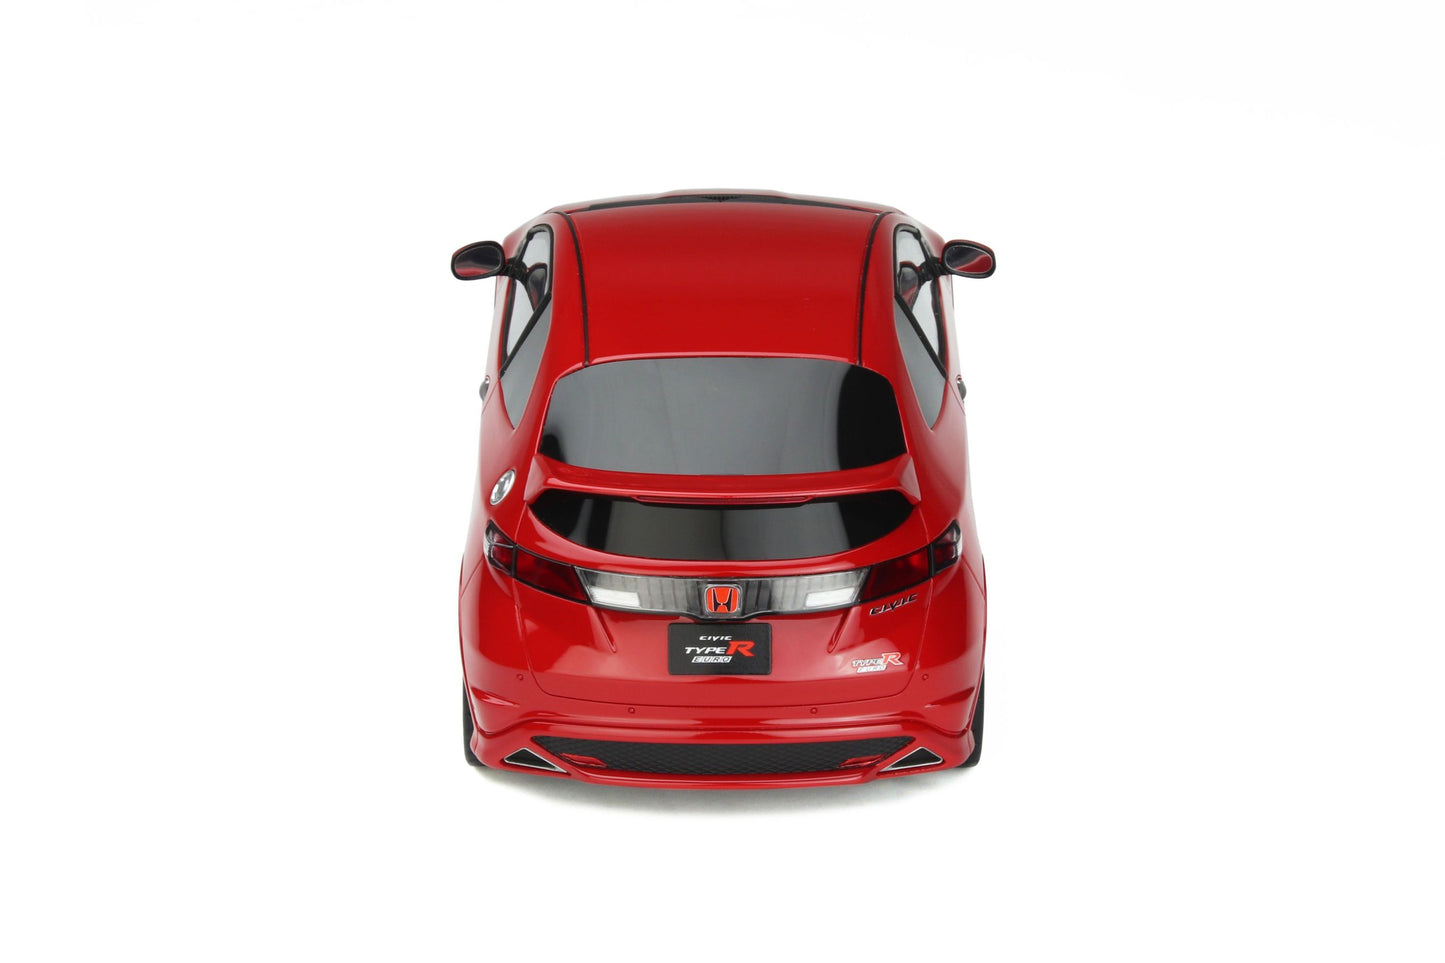 OttOmobile - Honda Civic Type R (FN2) (Euro Red) 1:18 Scale Model Car